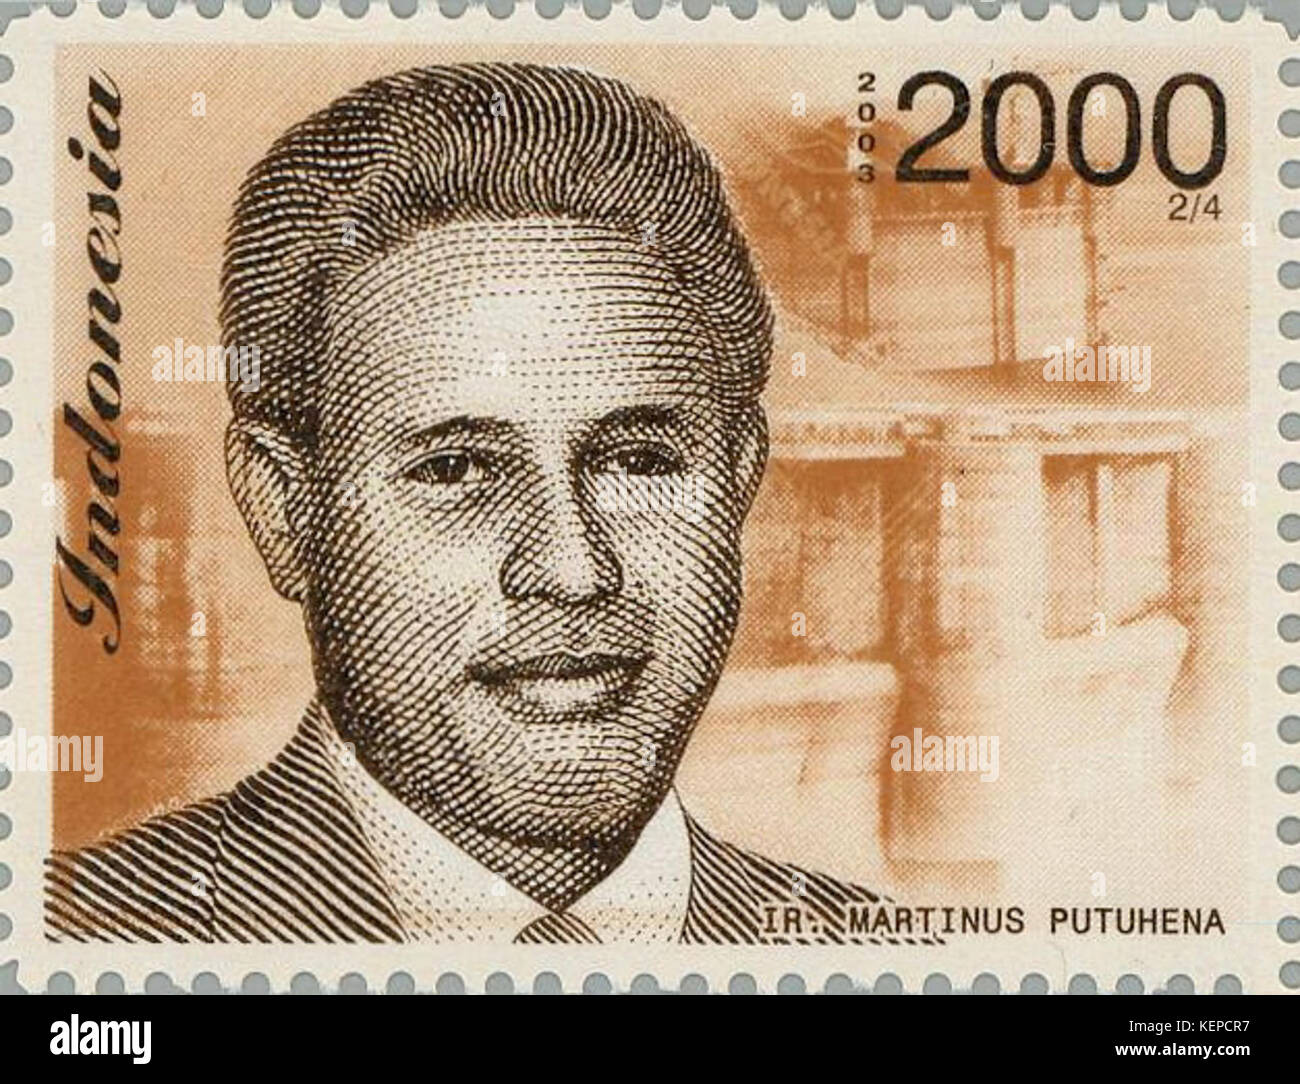 Martinus Putuhena 2003 Indonesia stamp Stock Photo